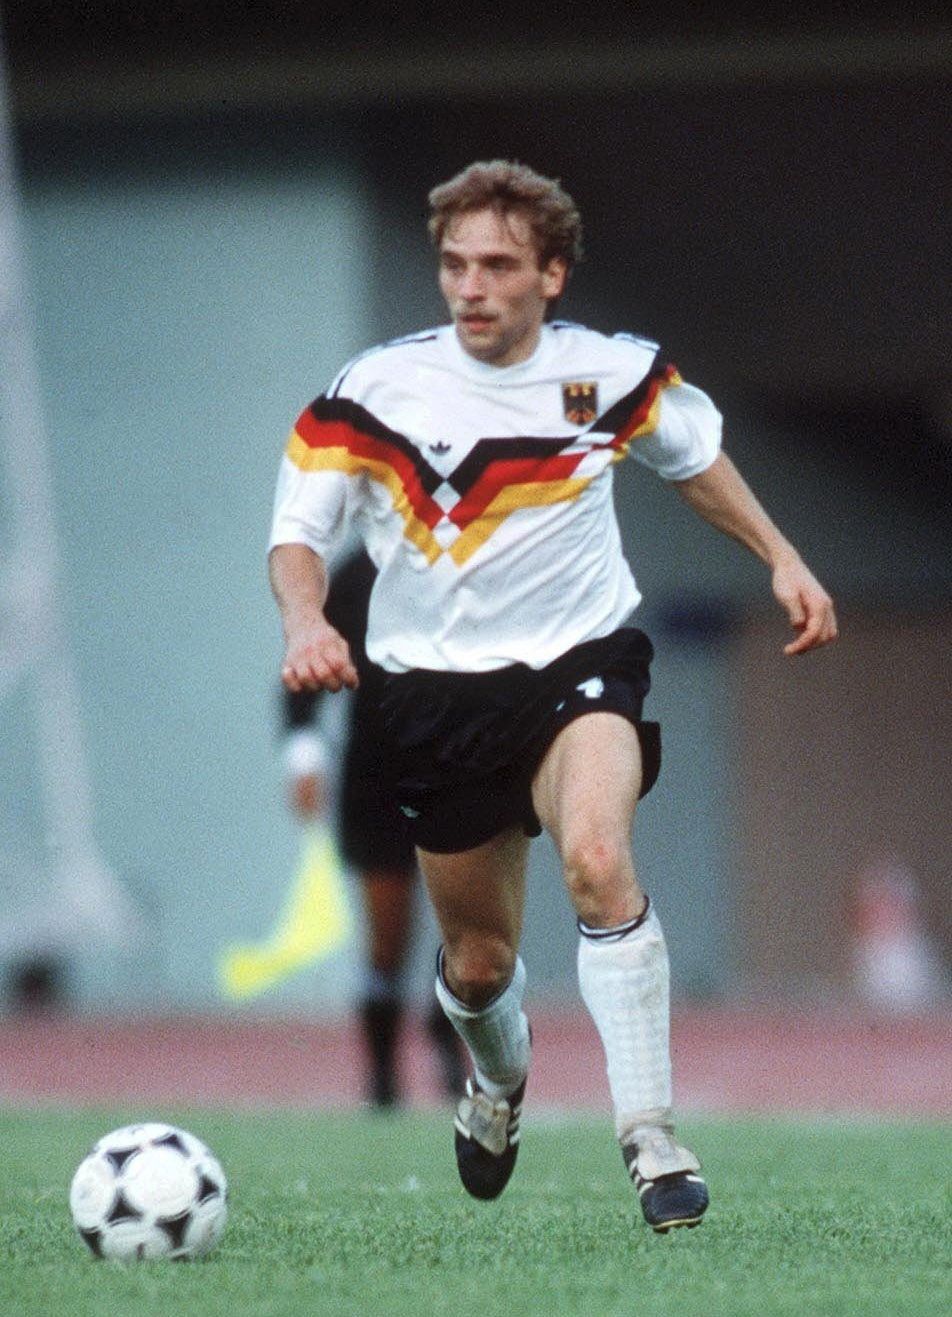 Hässler 1990-ben vébét nyert, 1996-ban pedig Európa-bajnok lett /Fotó: Gettyimages